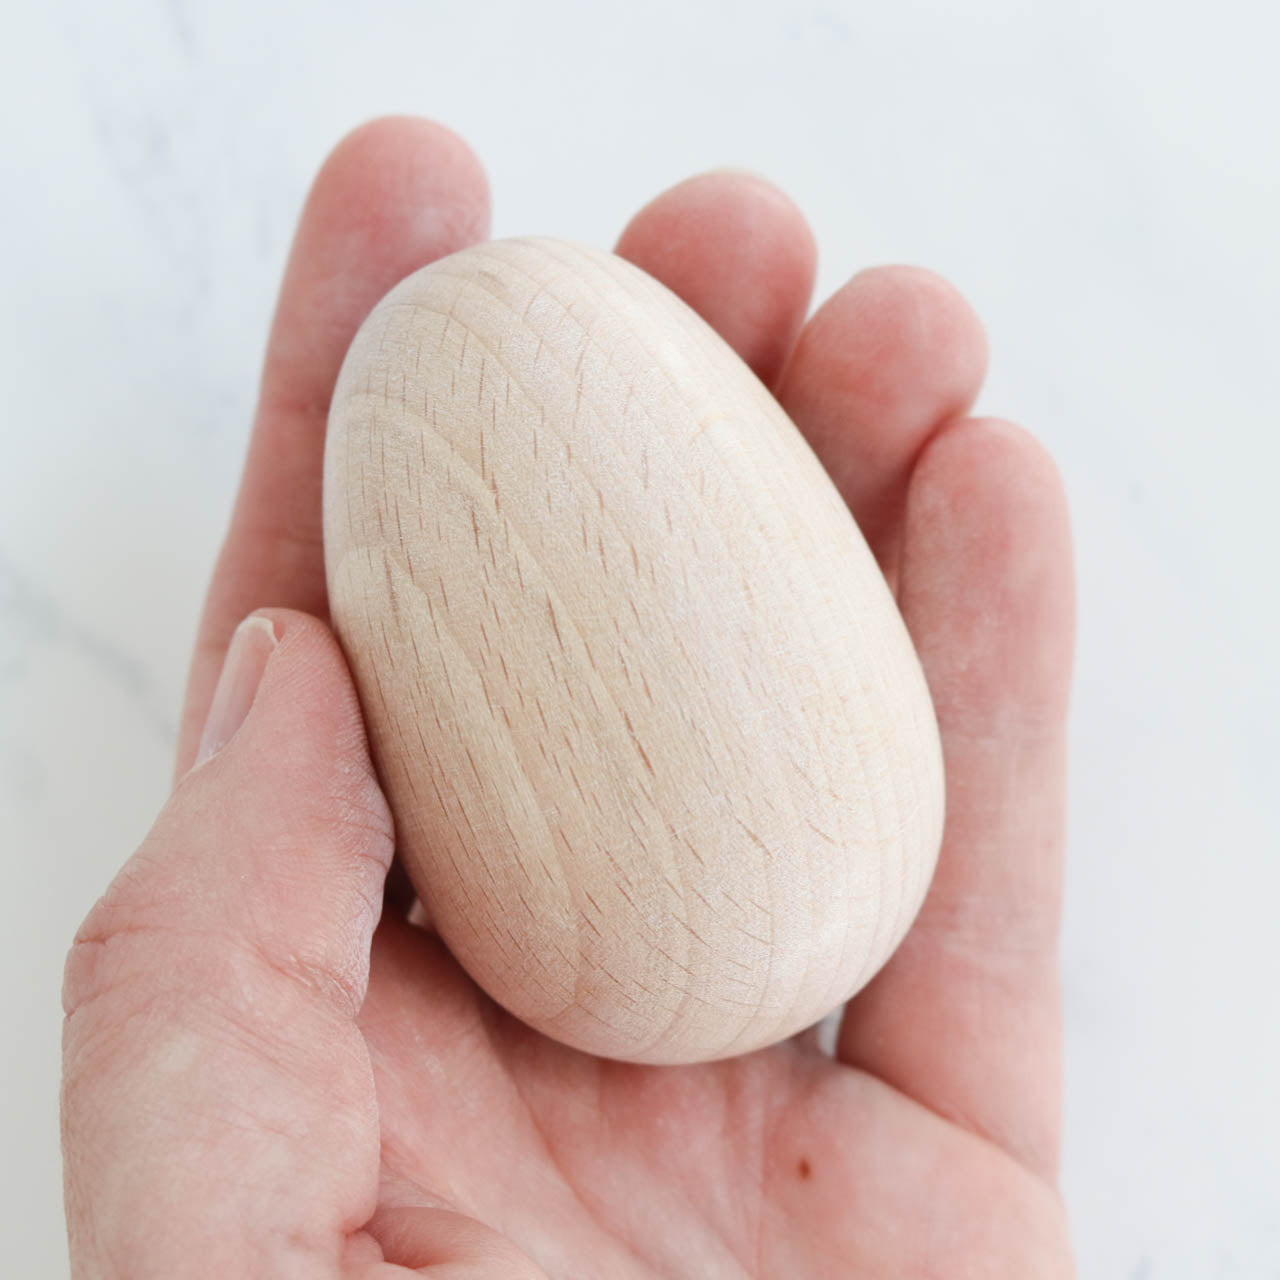 File:Darning egg.jpg - Wikipedia